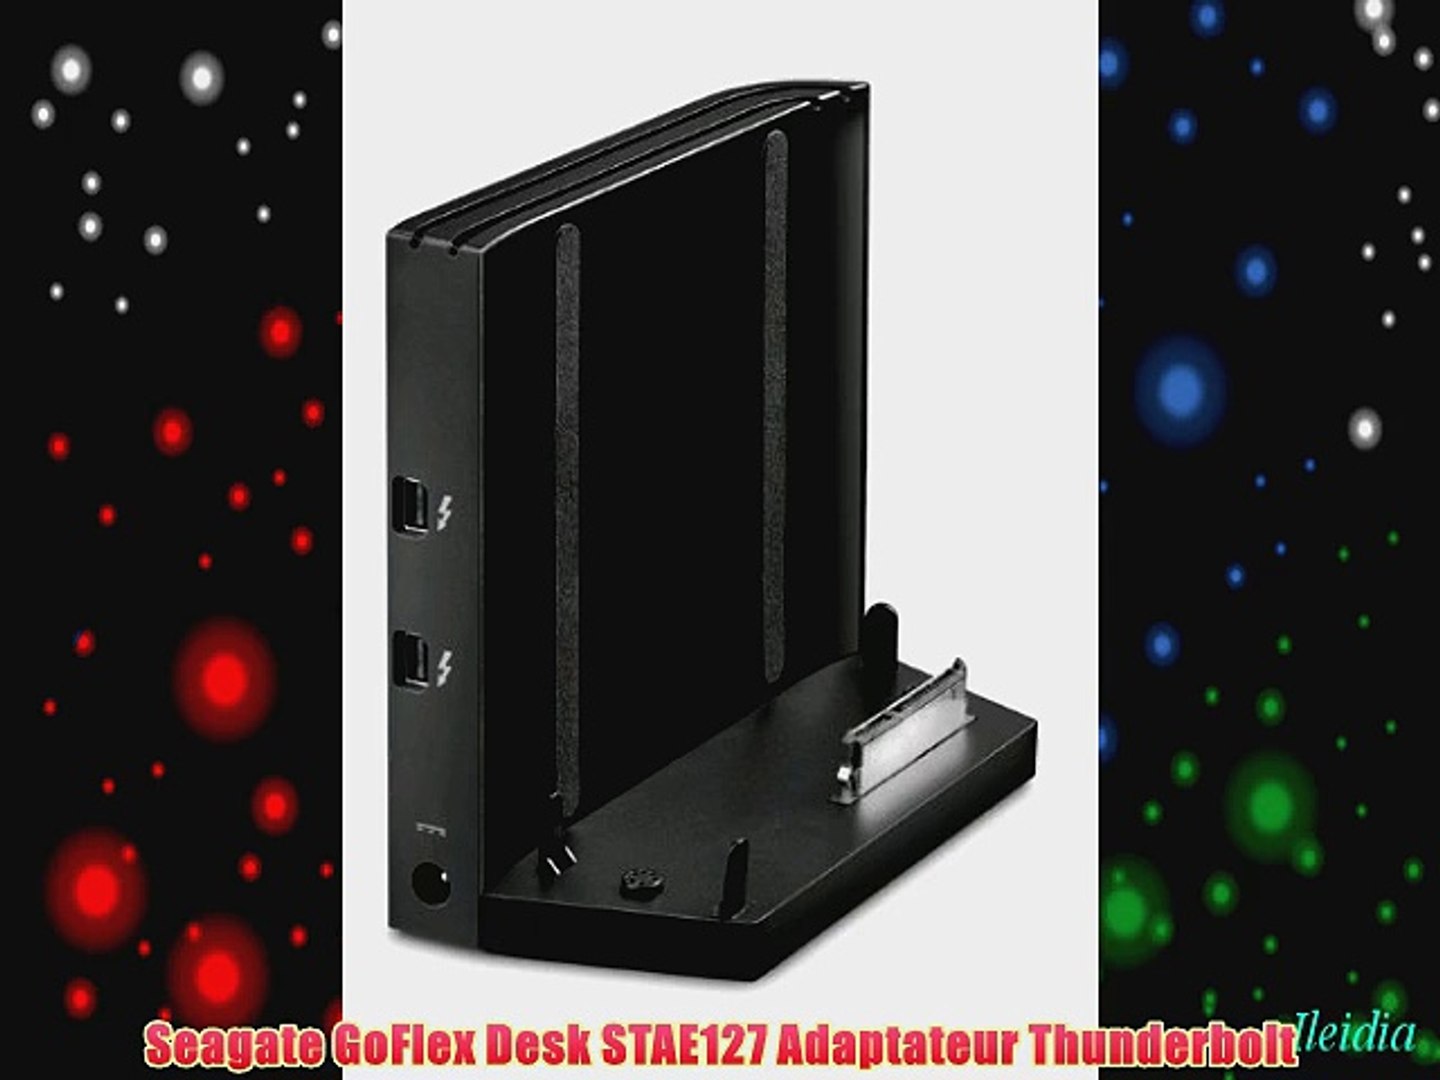 Seagate Goflex Desk Stae127 Adaptateur Thunderbolt Video Dailymotion